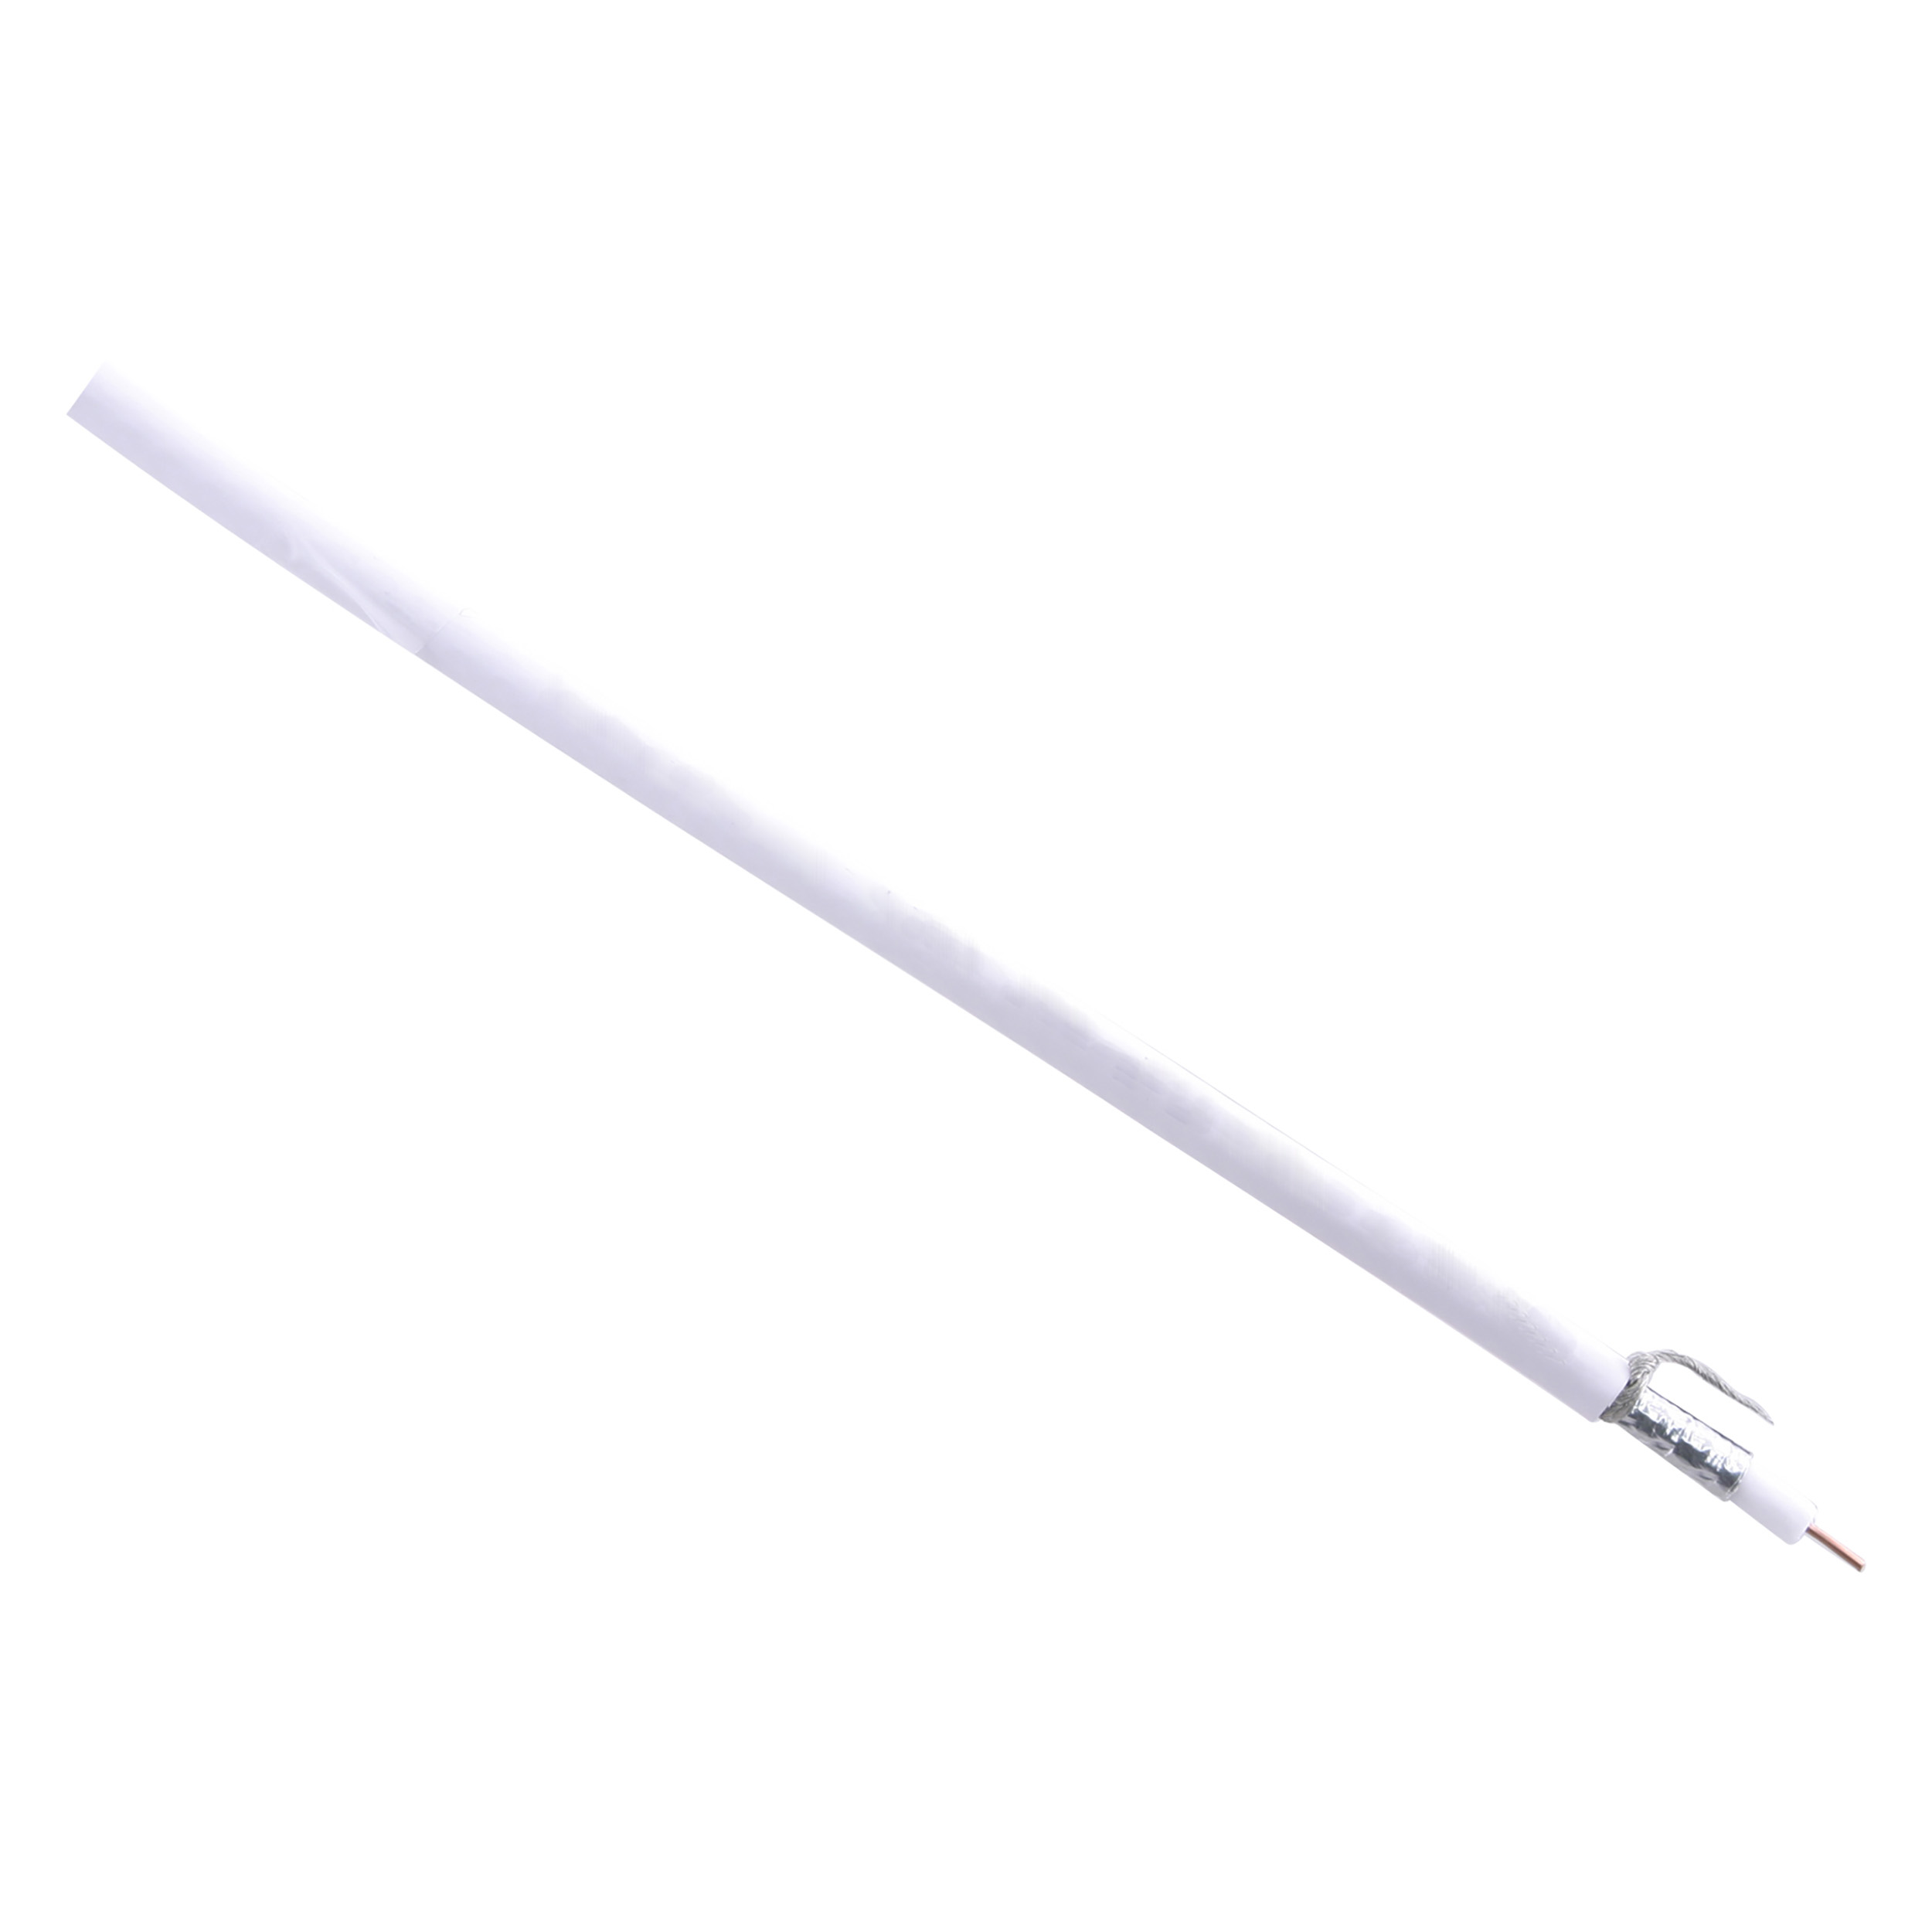 01.269.89   coax kabel 100 m (verkoop per meter) - satelliet - 75 ohm - Ø6 mm² - 100 m - wit